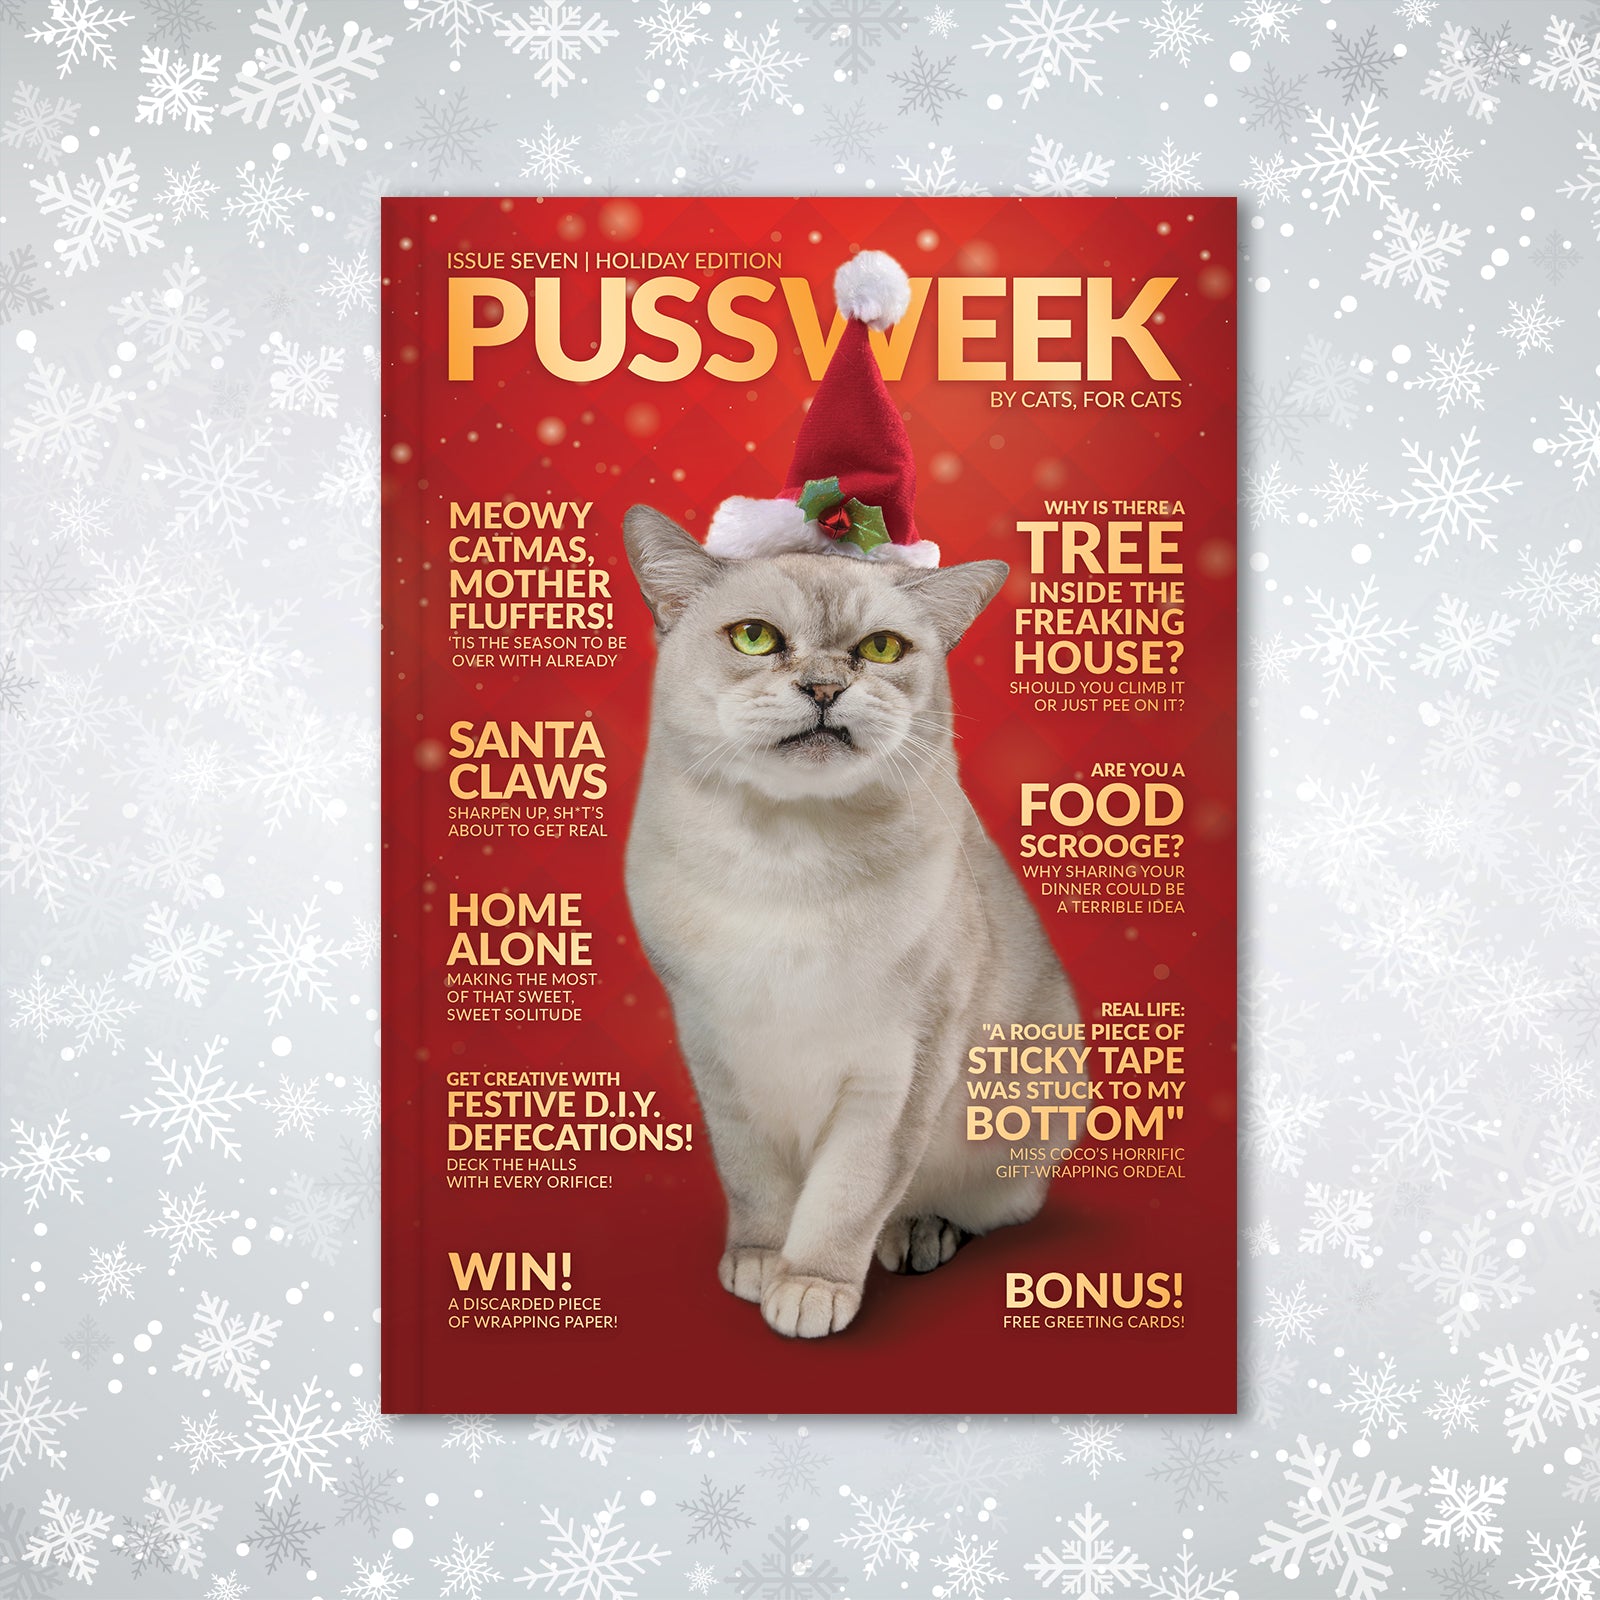 Pussweek Issue Seven